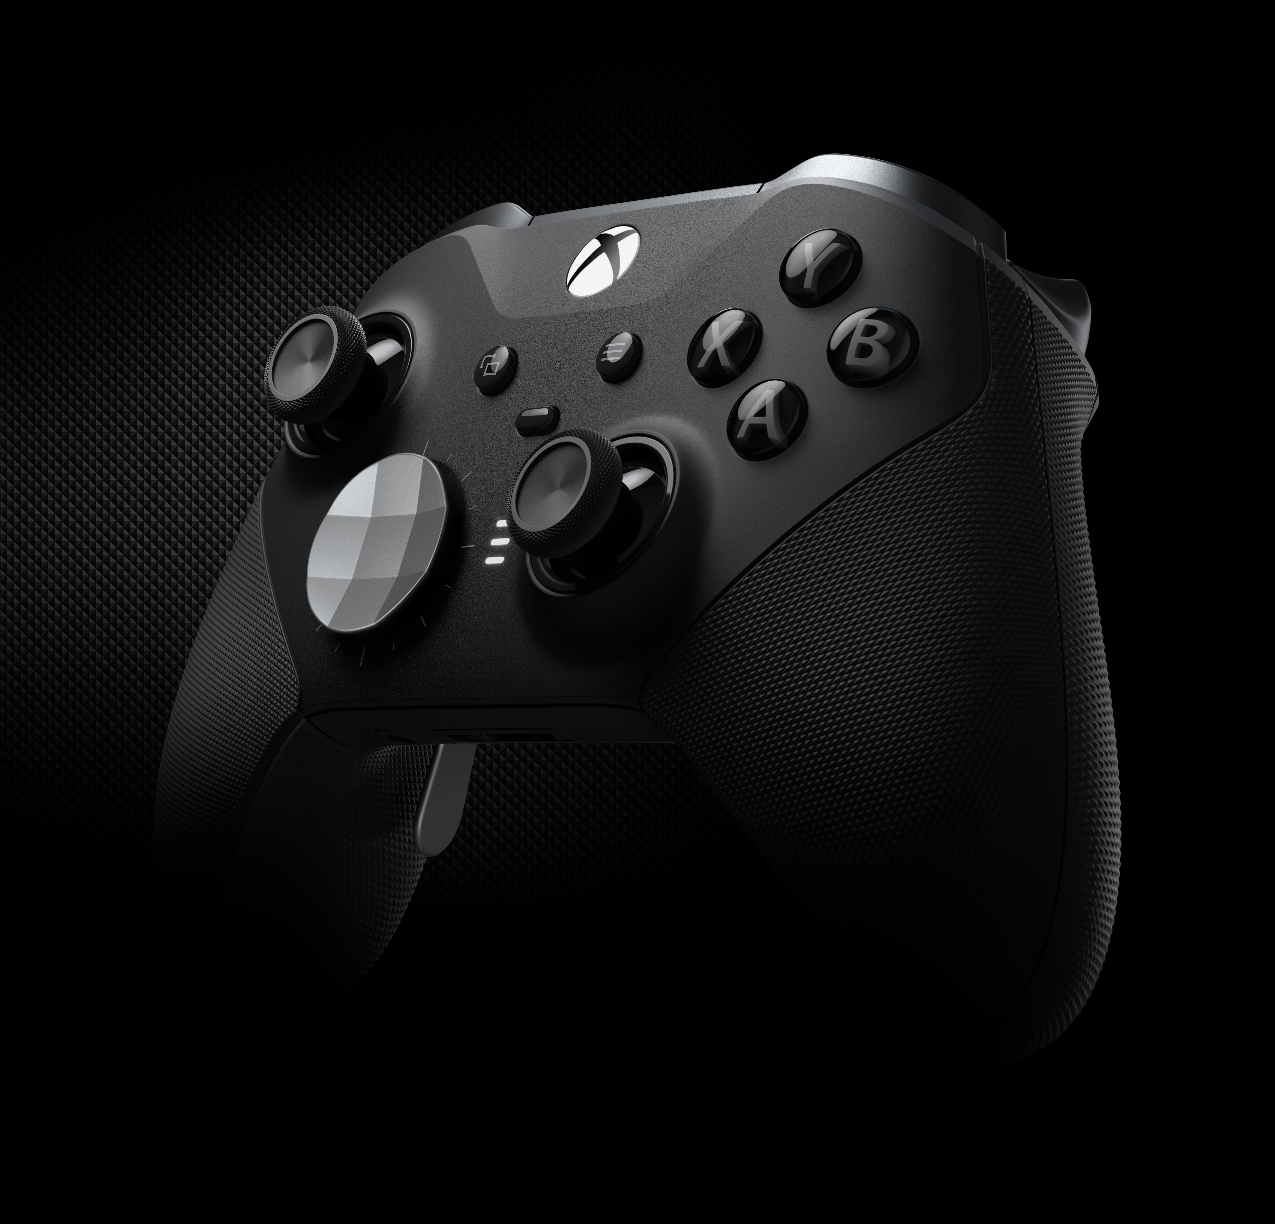 Meet the Xbox Elite Wireless Controller Series 2, Over 30 New Ways